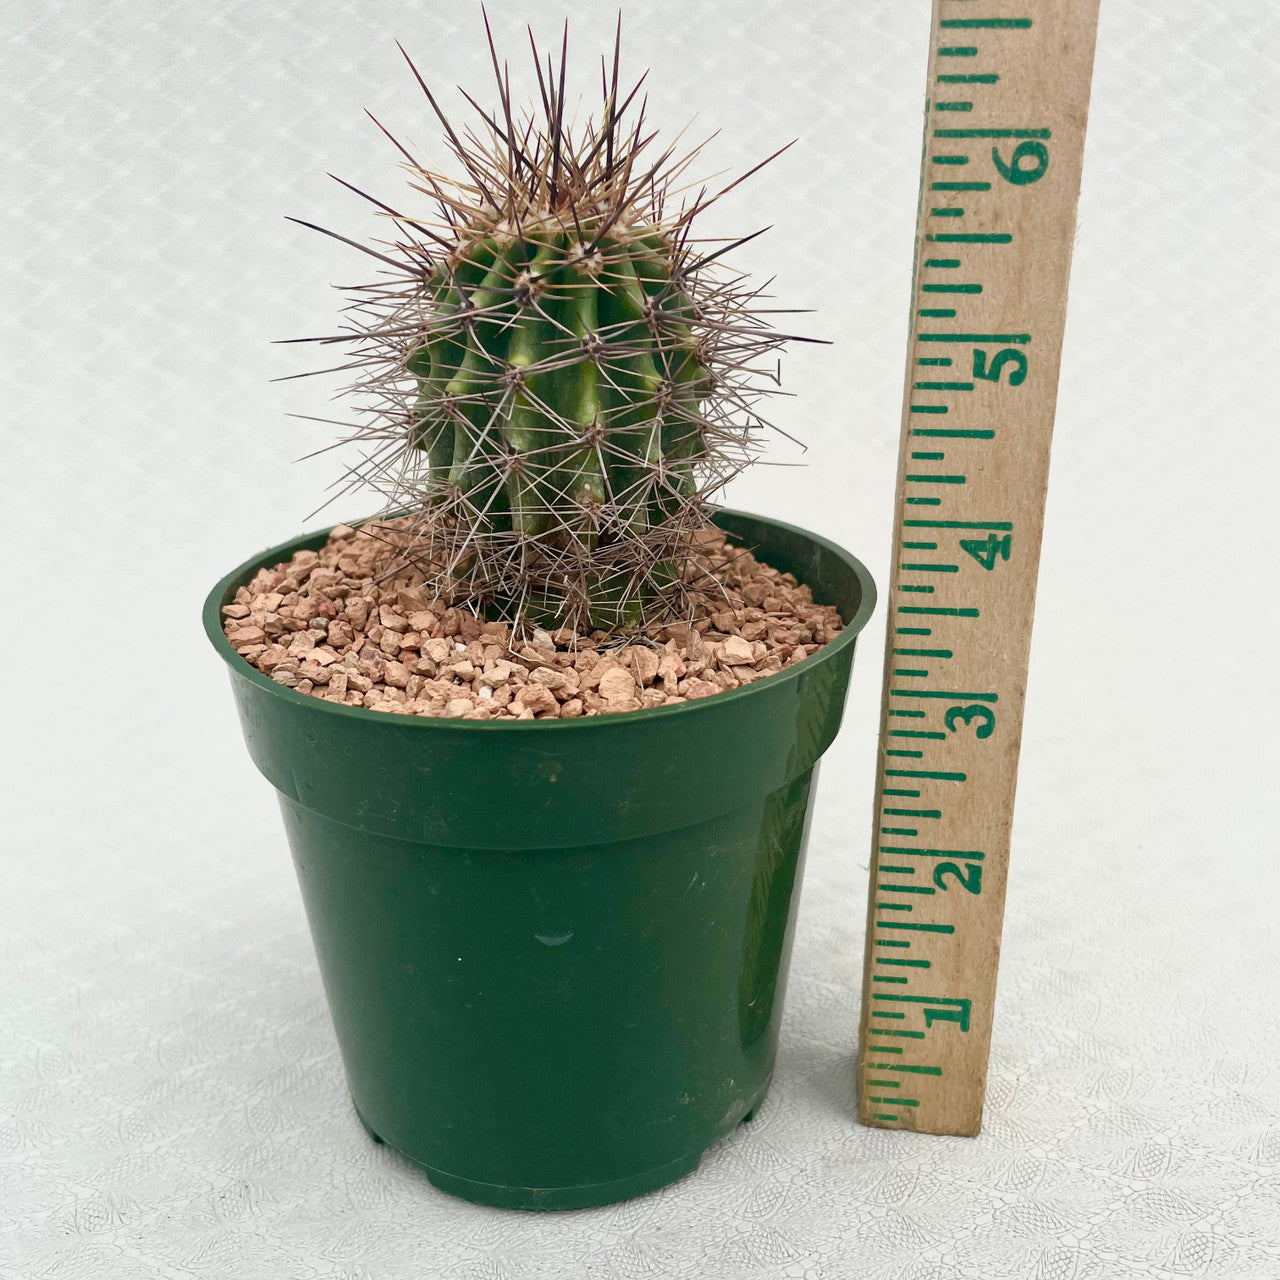 a potted Carnegiea Gigantea next to a measuring stick